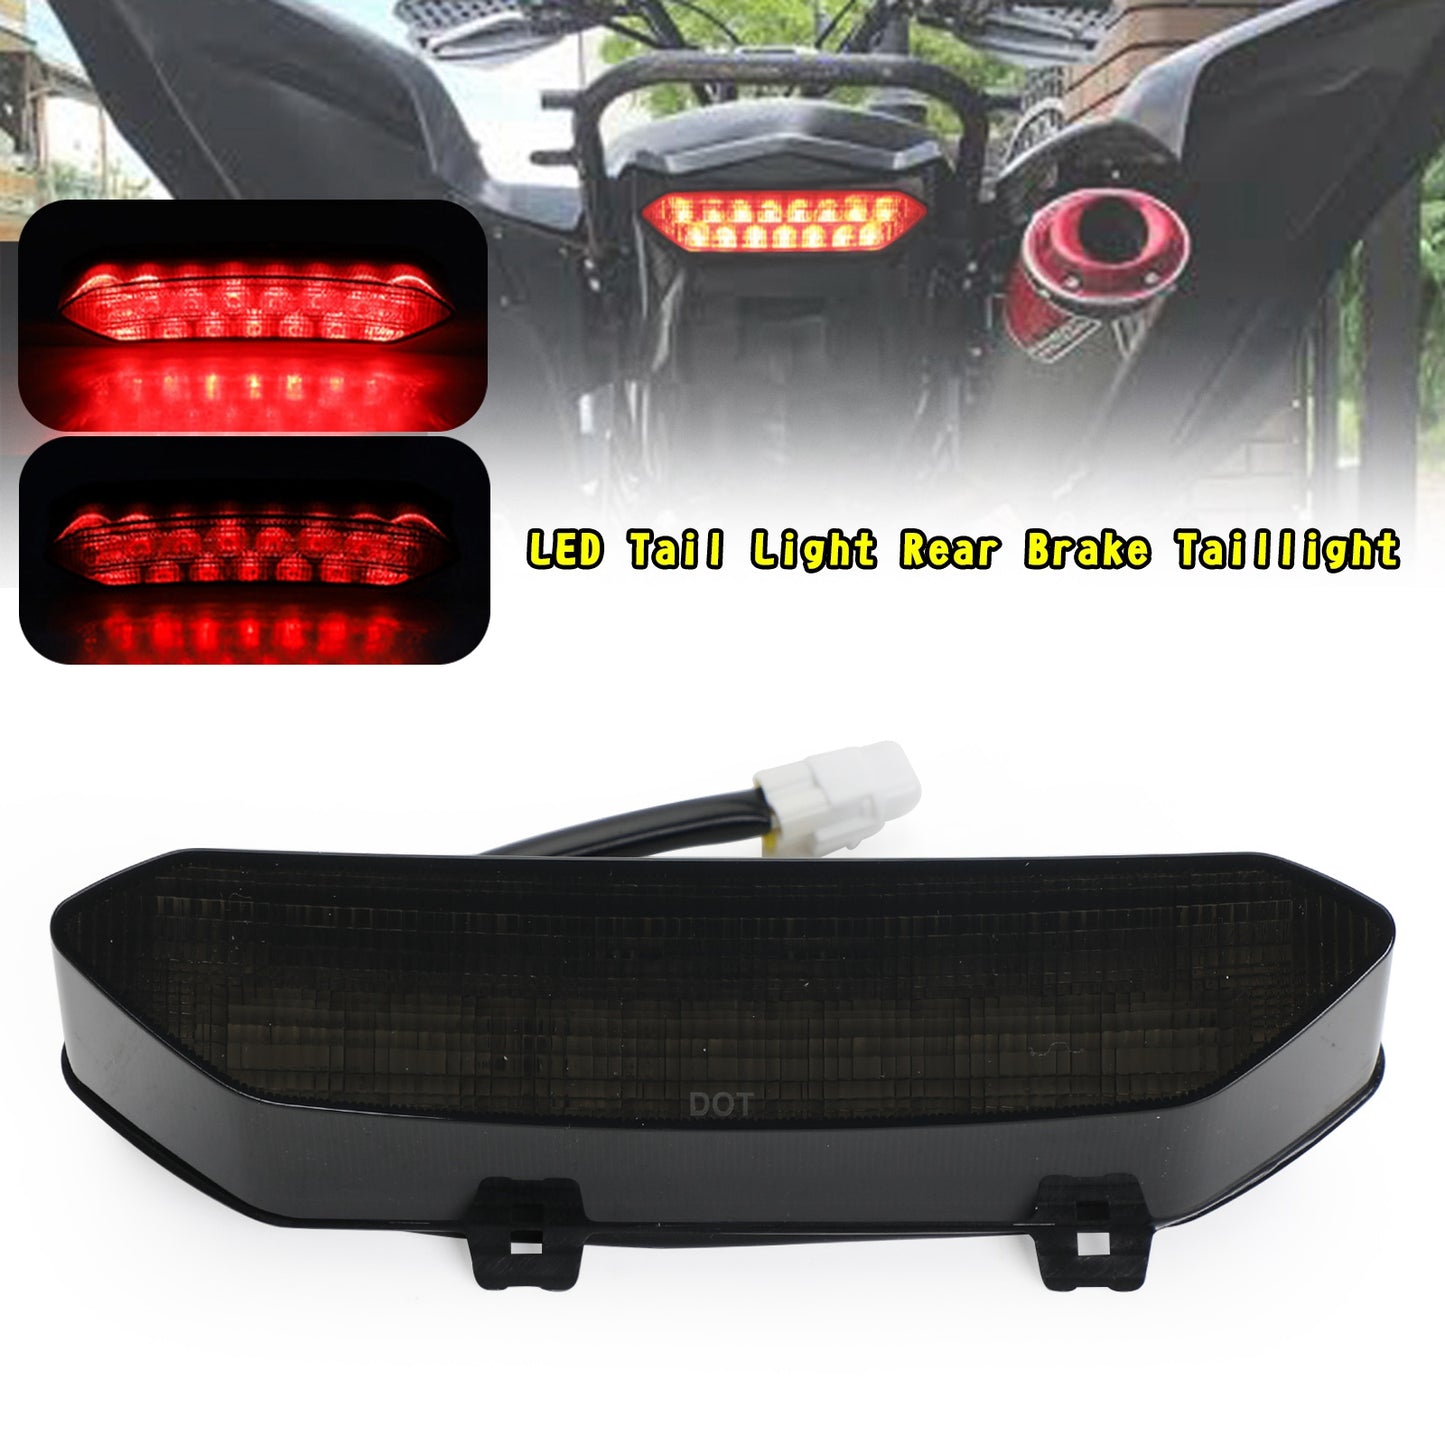 LED Brake Tail Light Fit For Yamaha Raptor 700/700R YFZ450R 2006-2018 Black